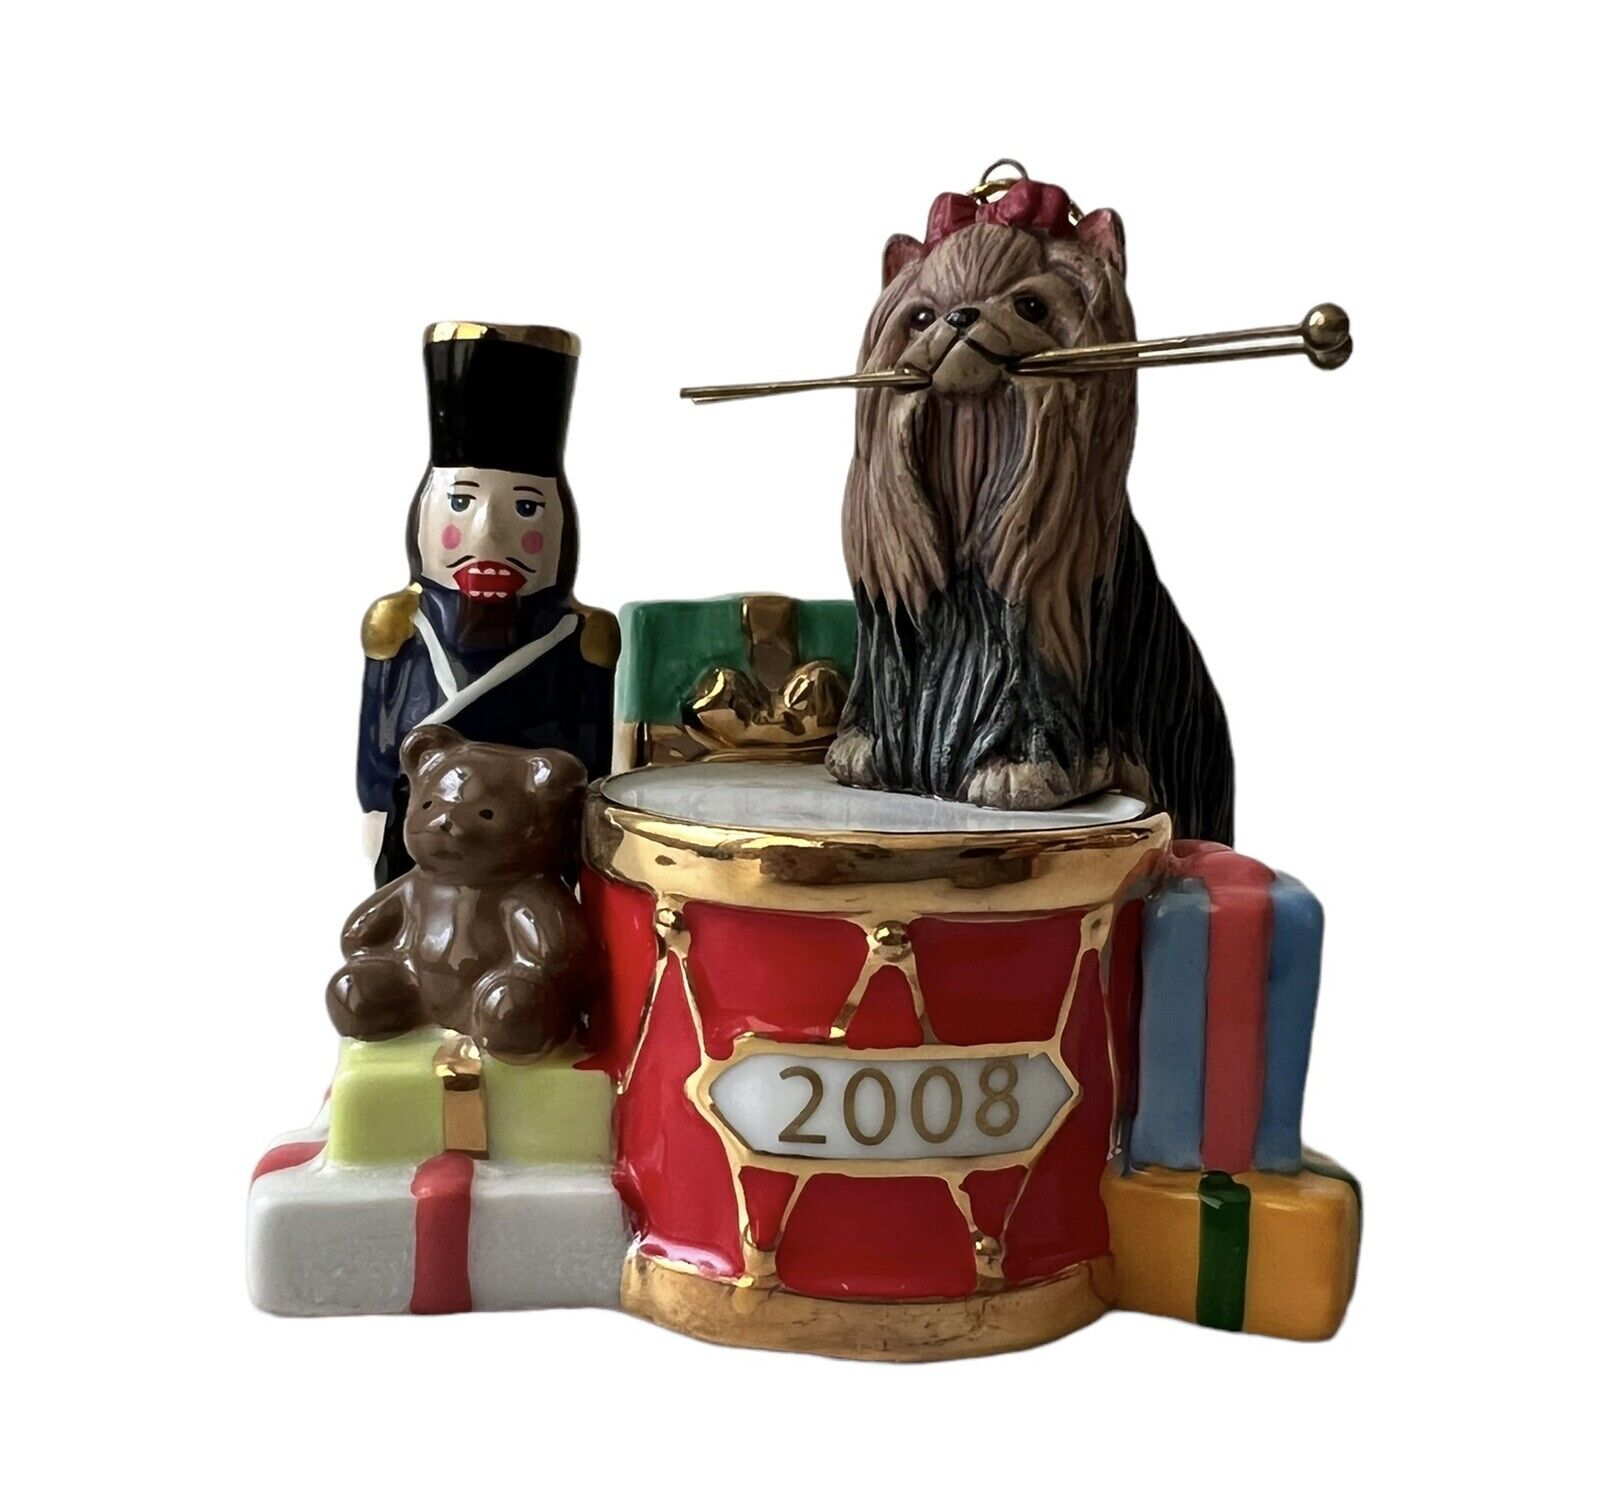 2008 Danbury Mint Annual Christmas Drummer Yorkie Ornament